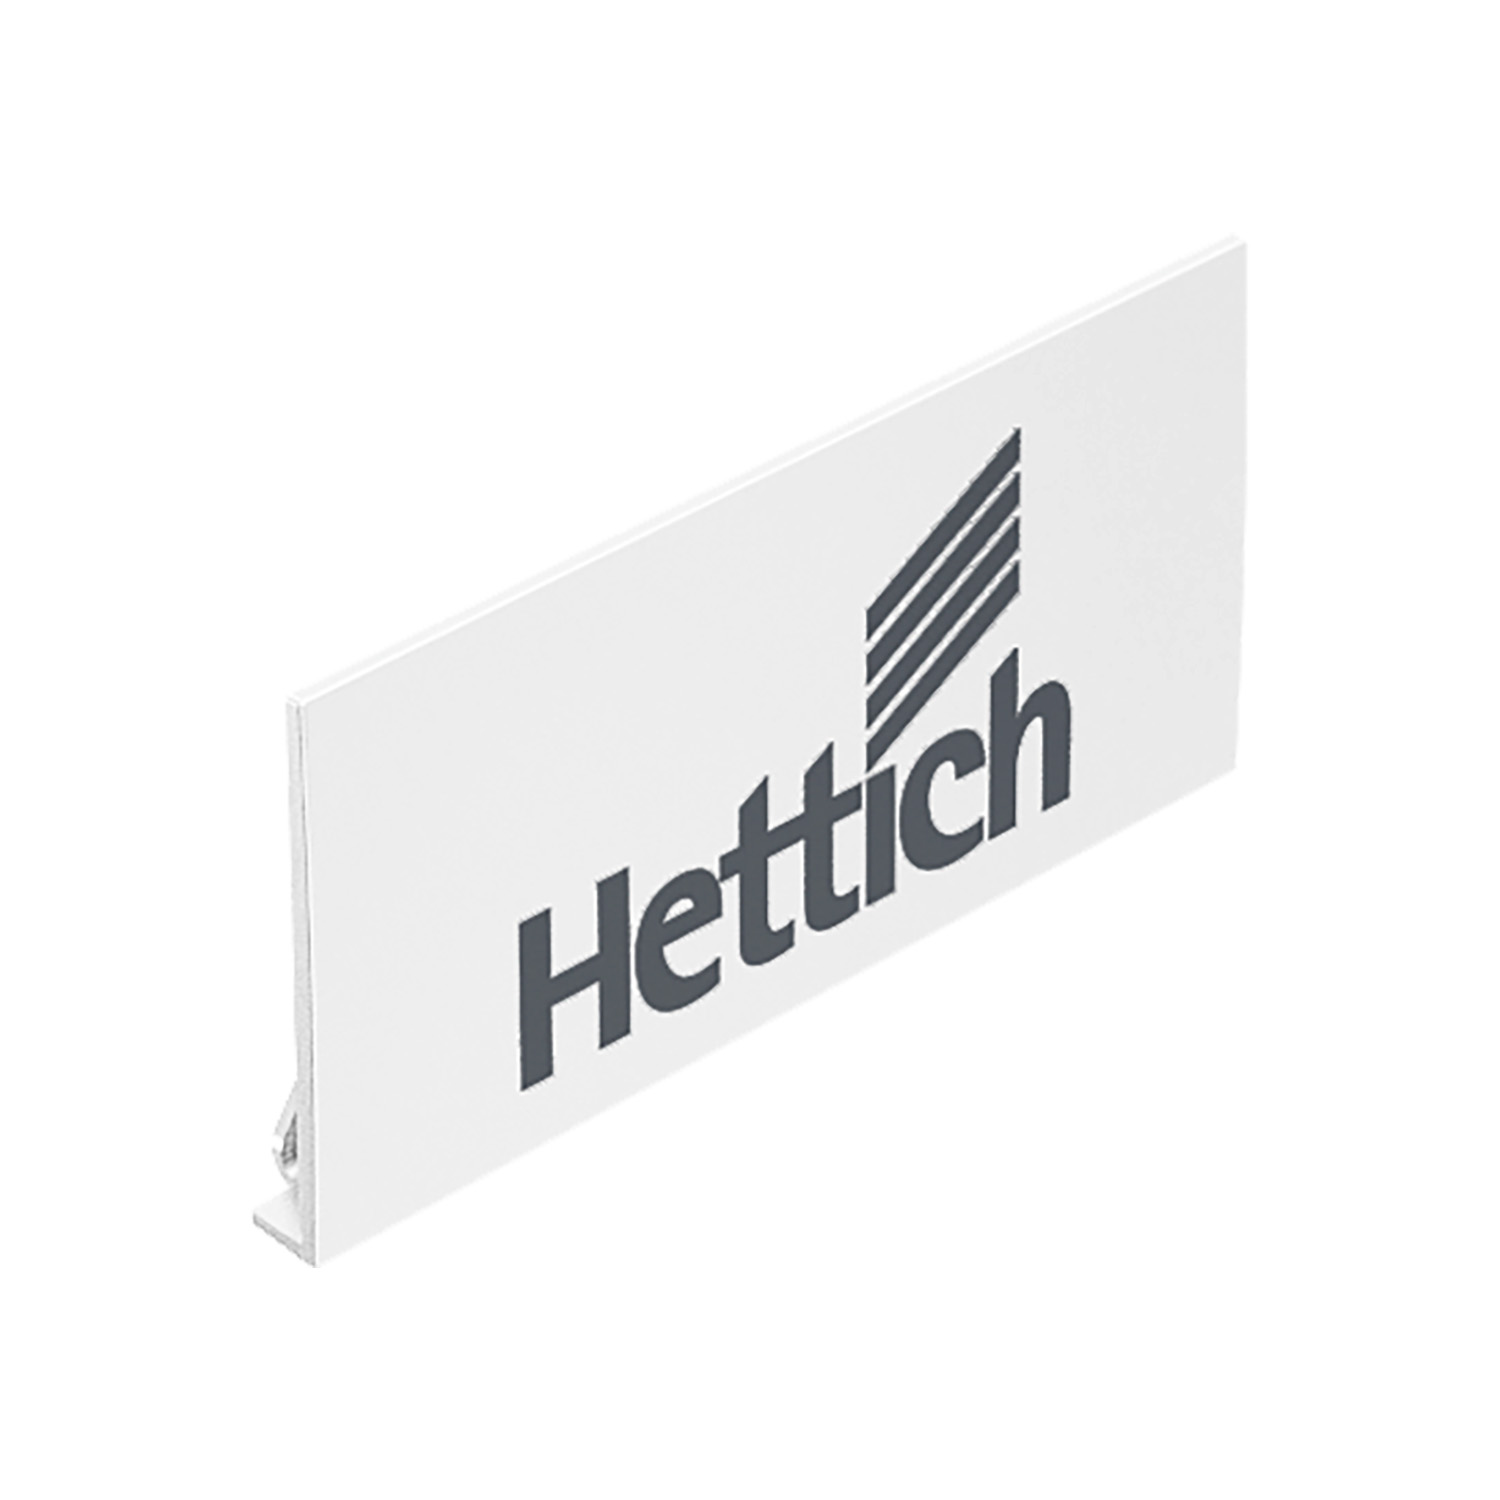 HETTICH AvanTech YOU Brandingclip, weiß mit Hettich Logo, 9257704